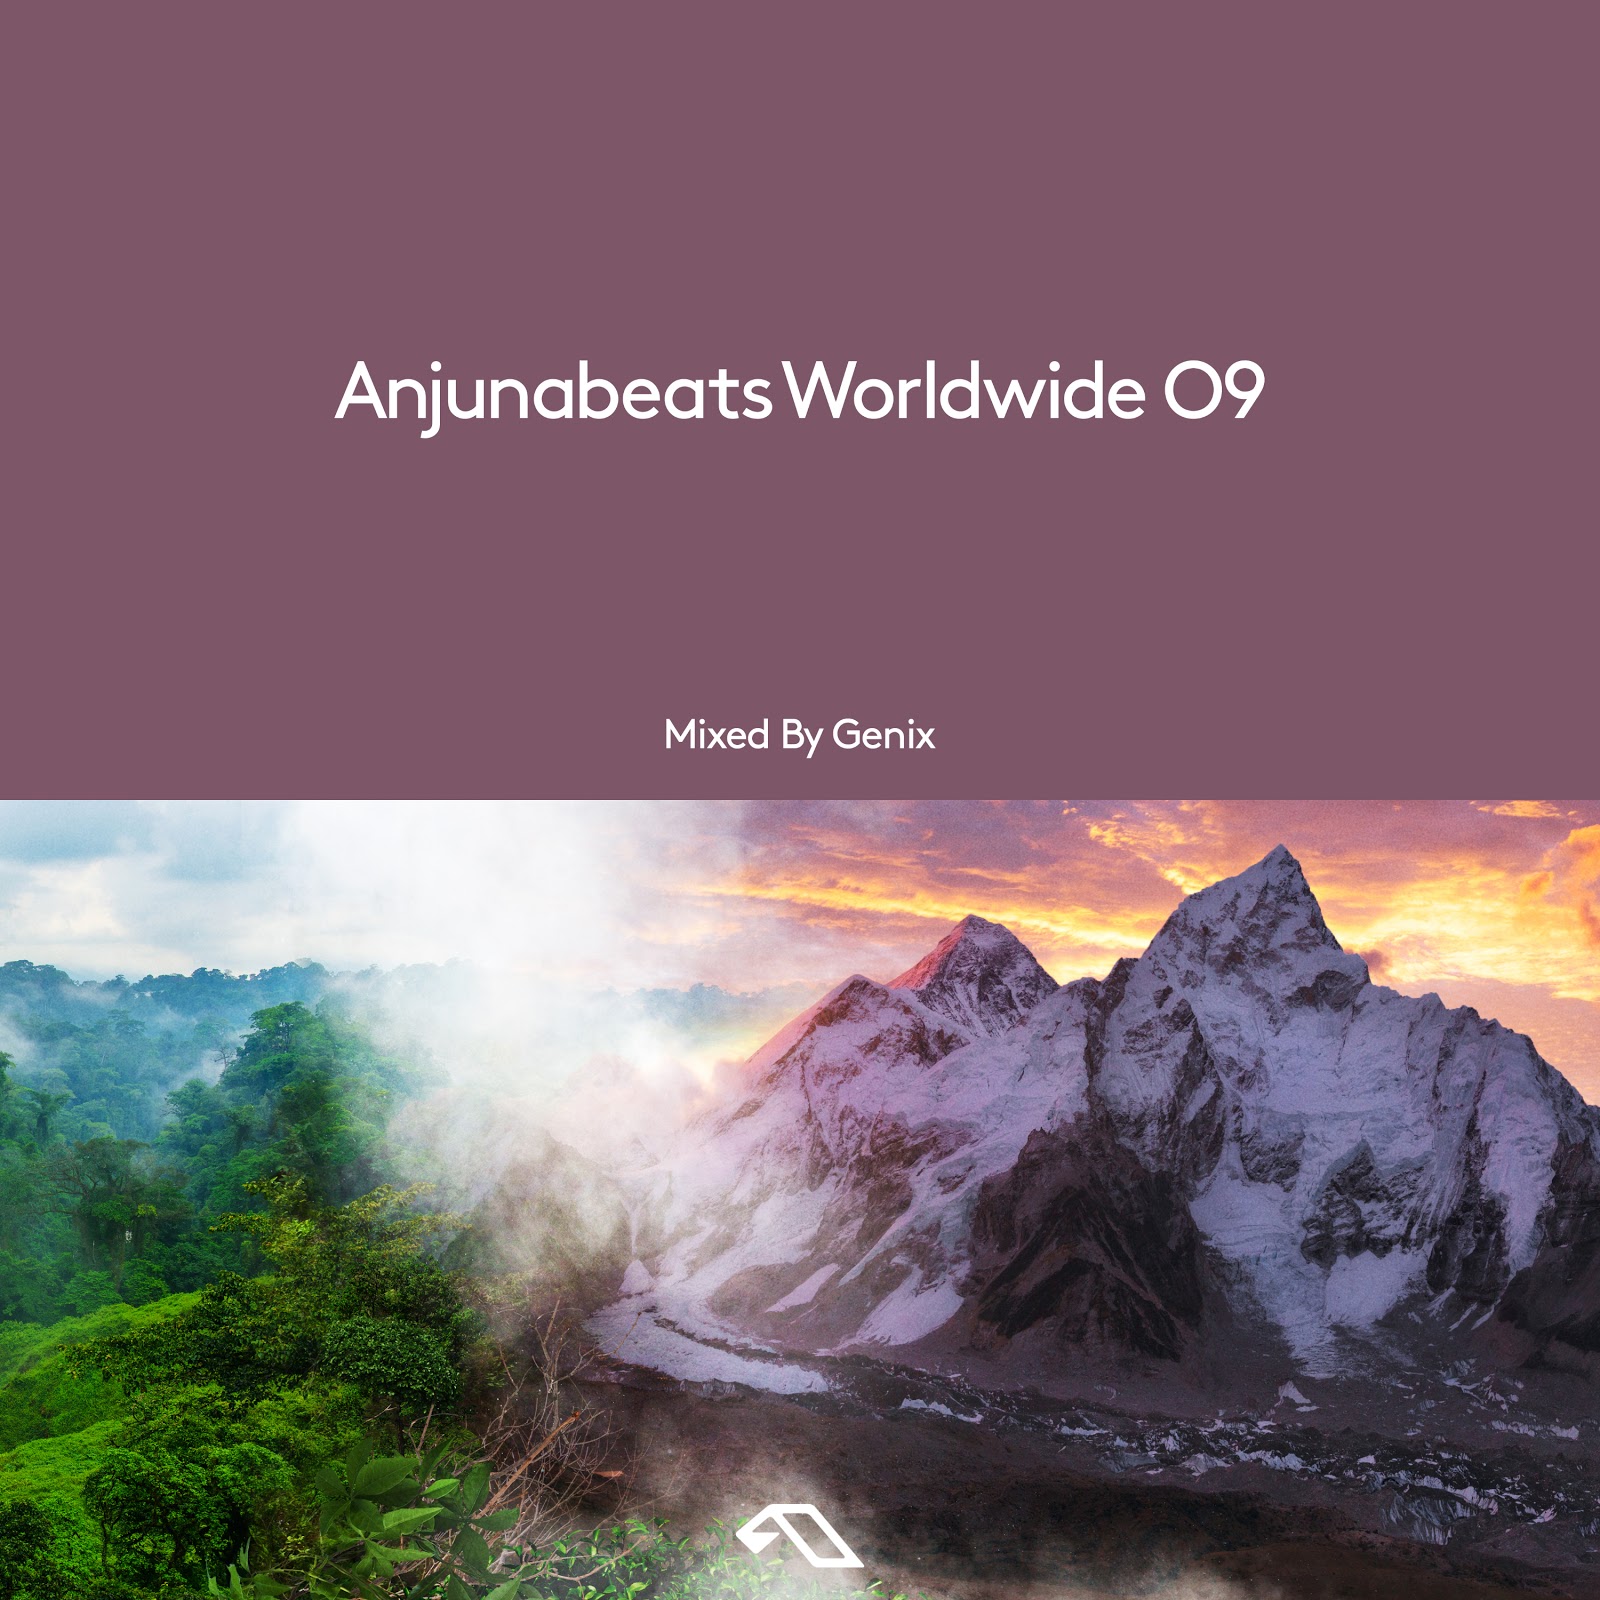 Various Artists presents Anjunabeats Worldwide 09 mixed by Genix on Anjunabeats